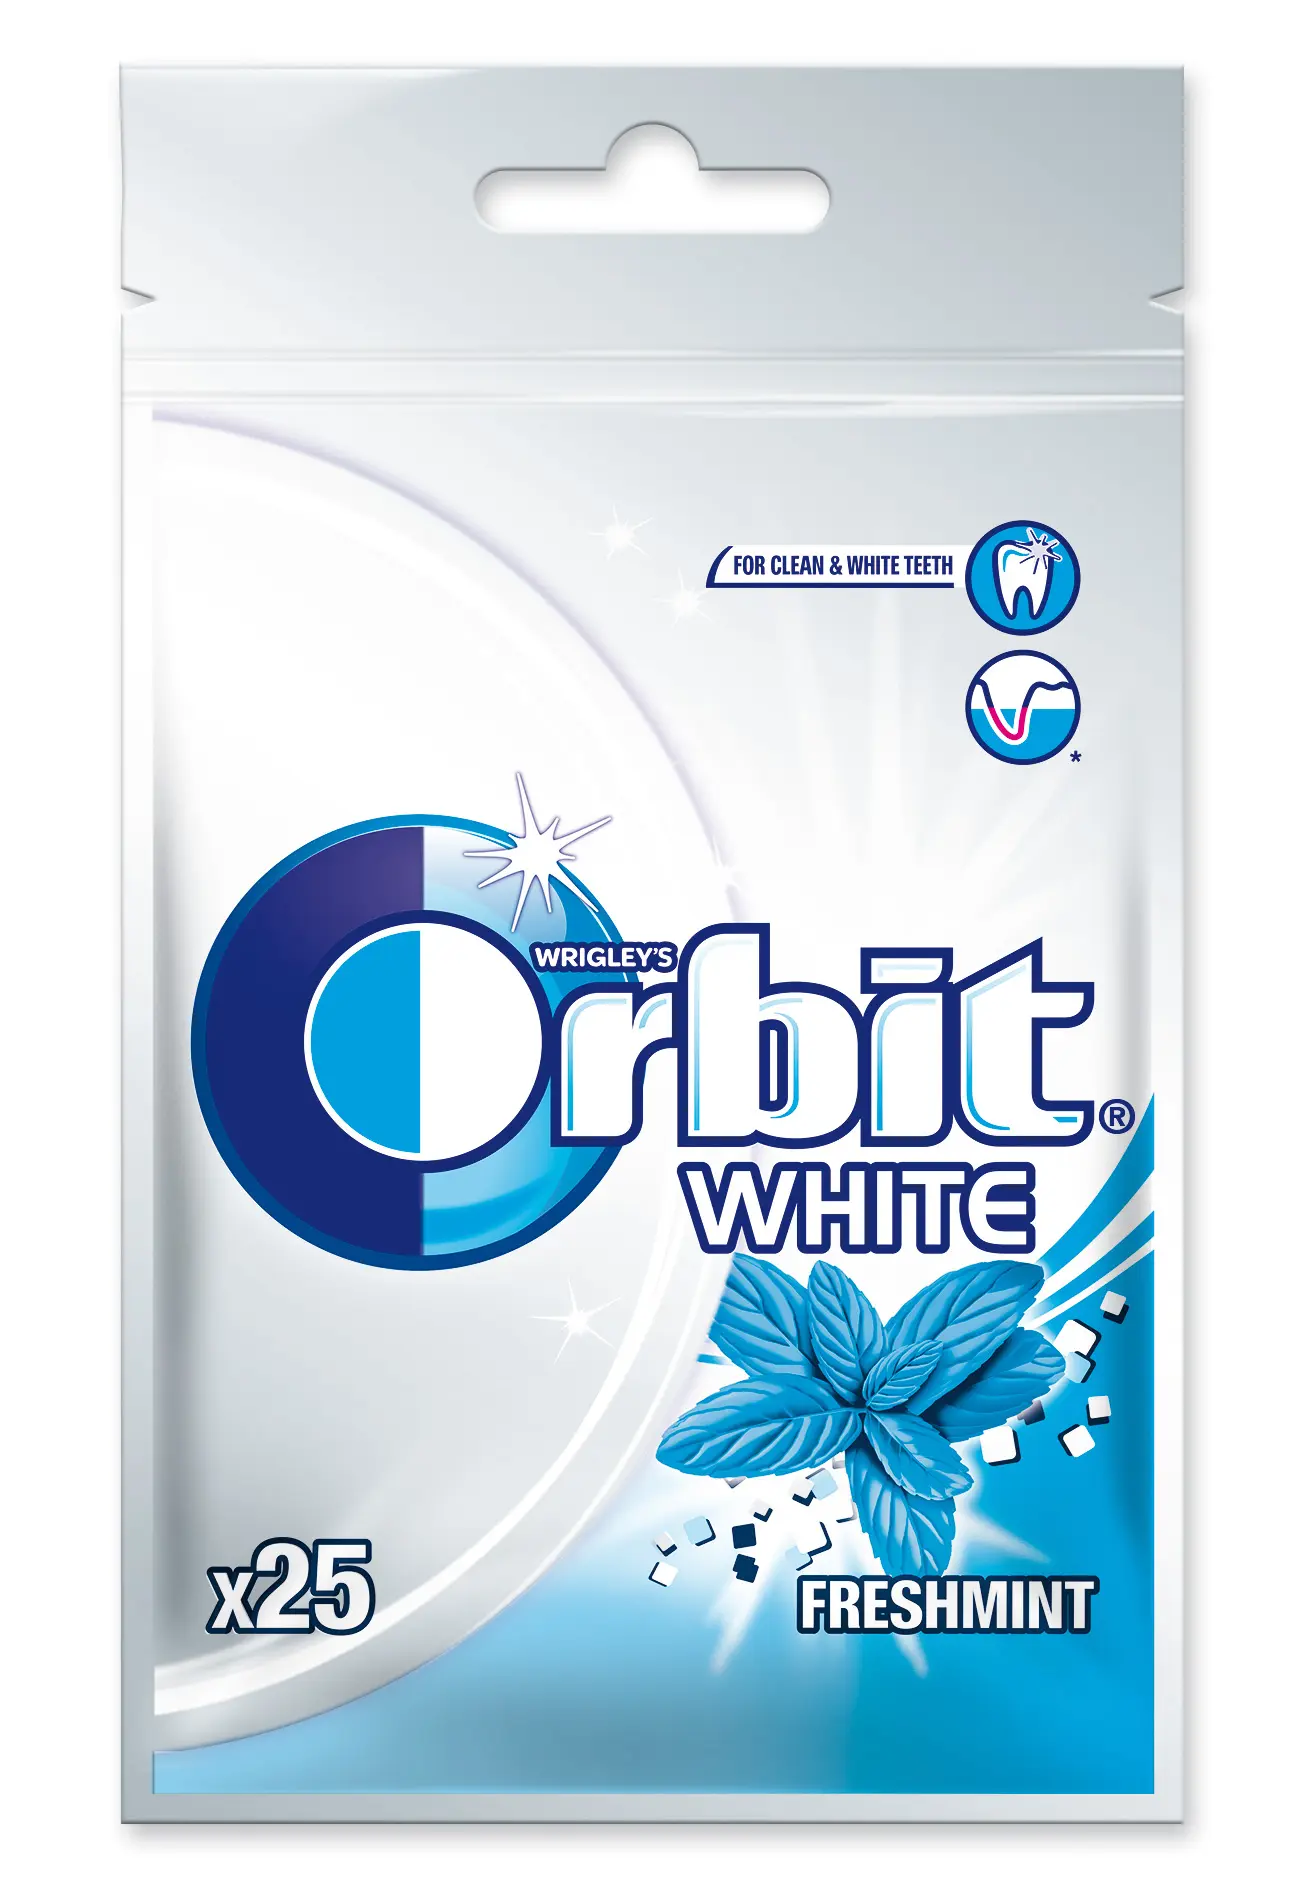 Guma Orbit Freshmint White torba